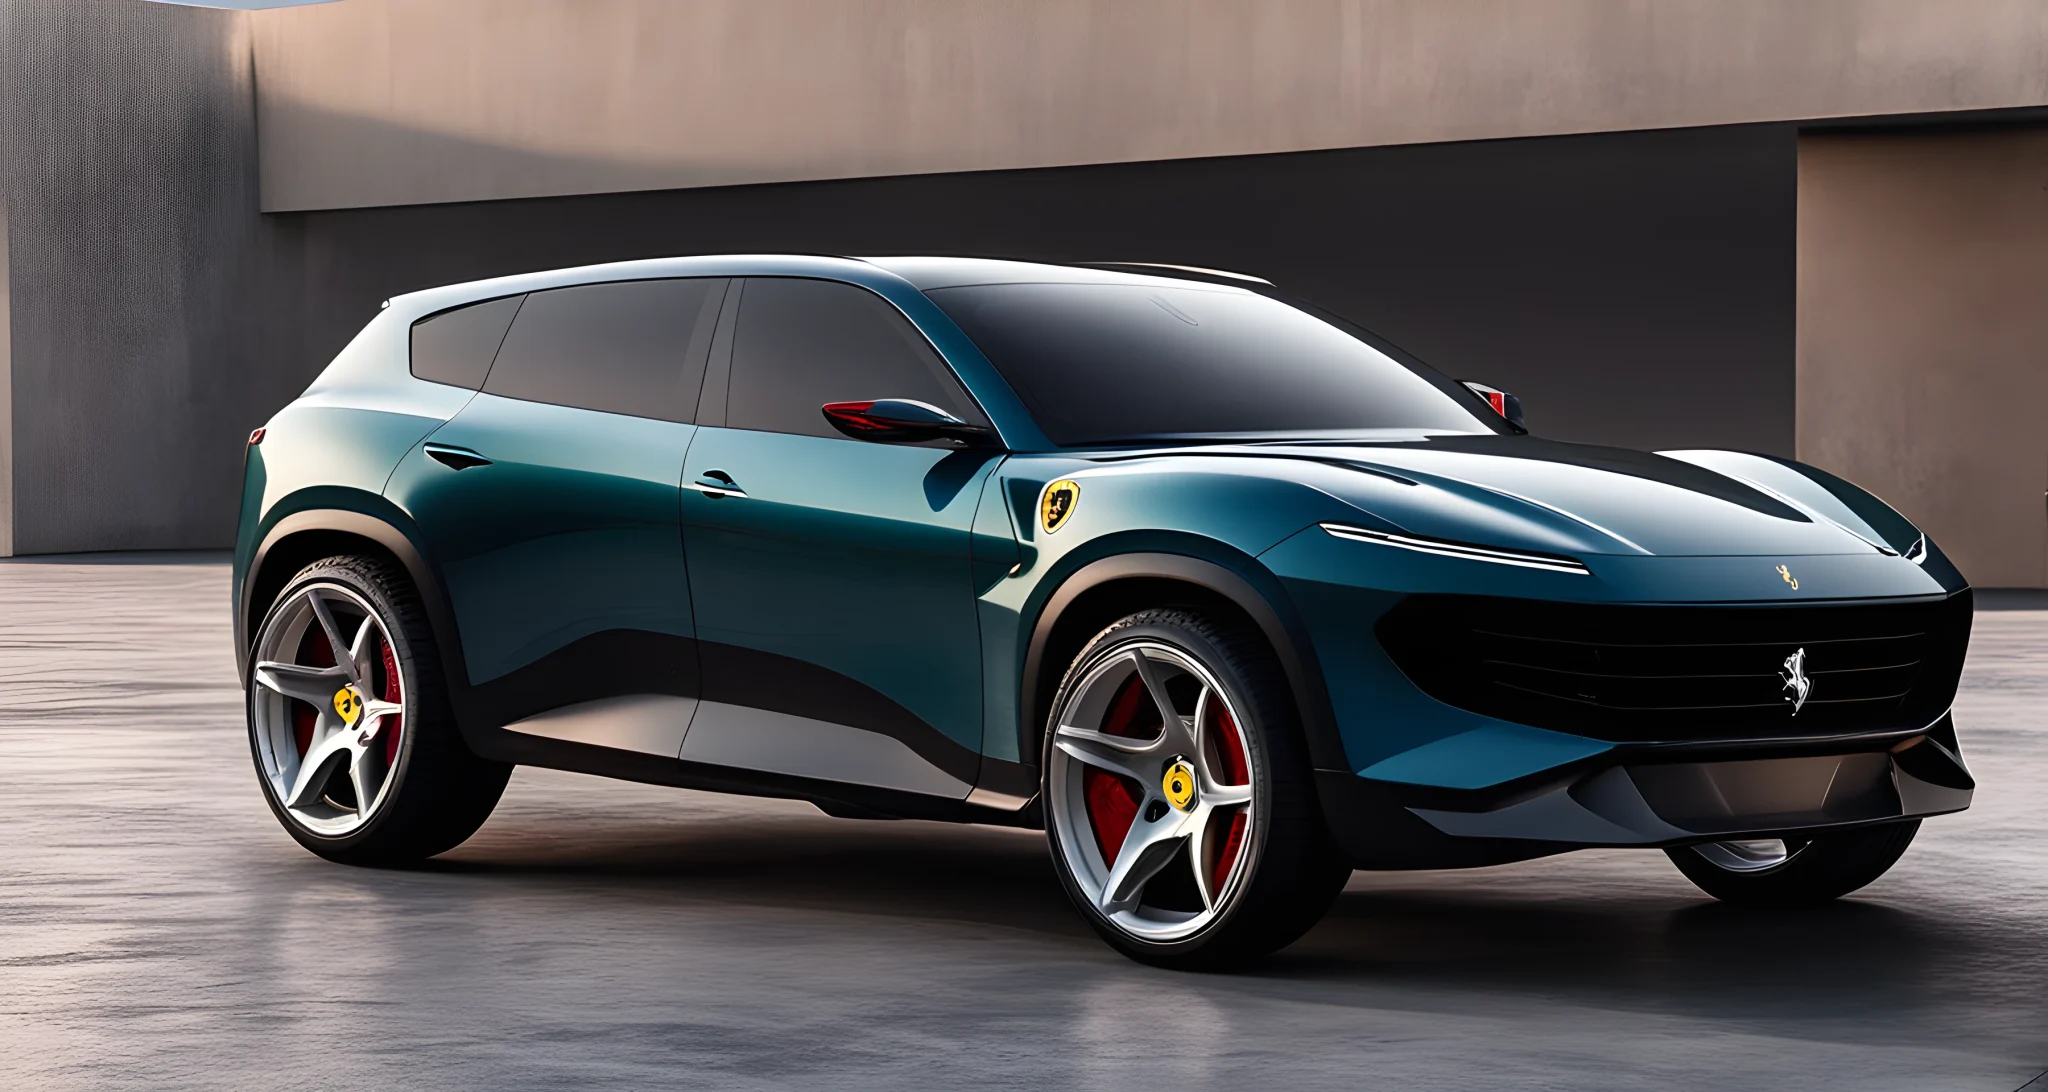 The image shows the 2024 Ferrari Purosangue, a sleek and modern luxury SUV.